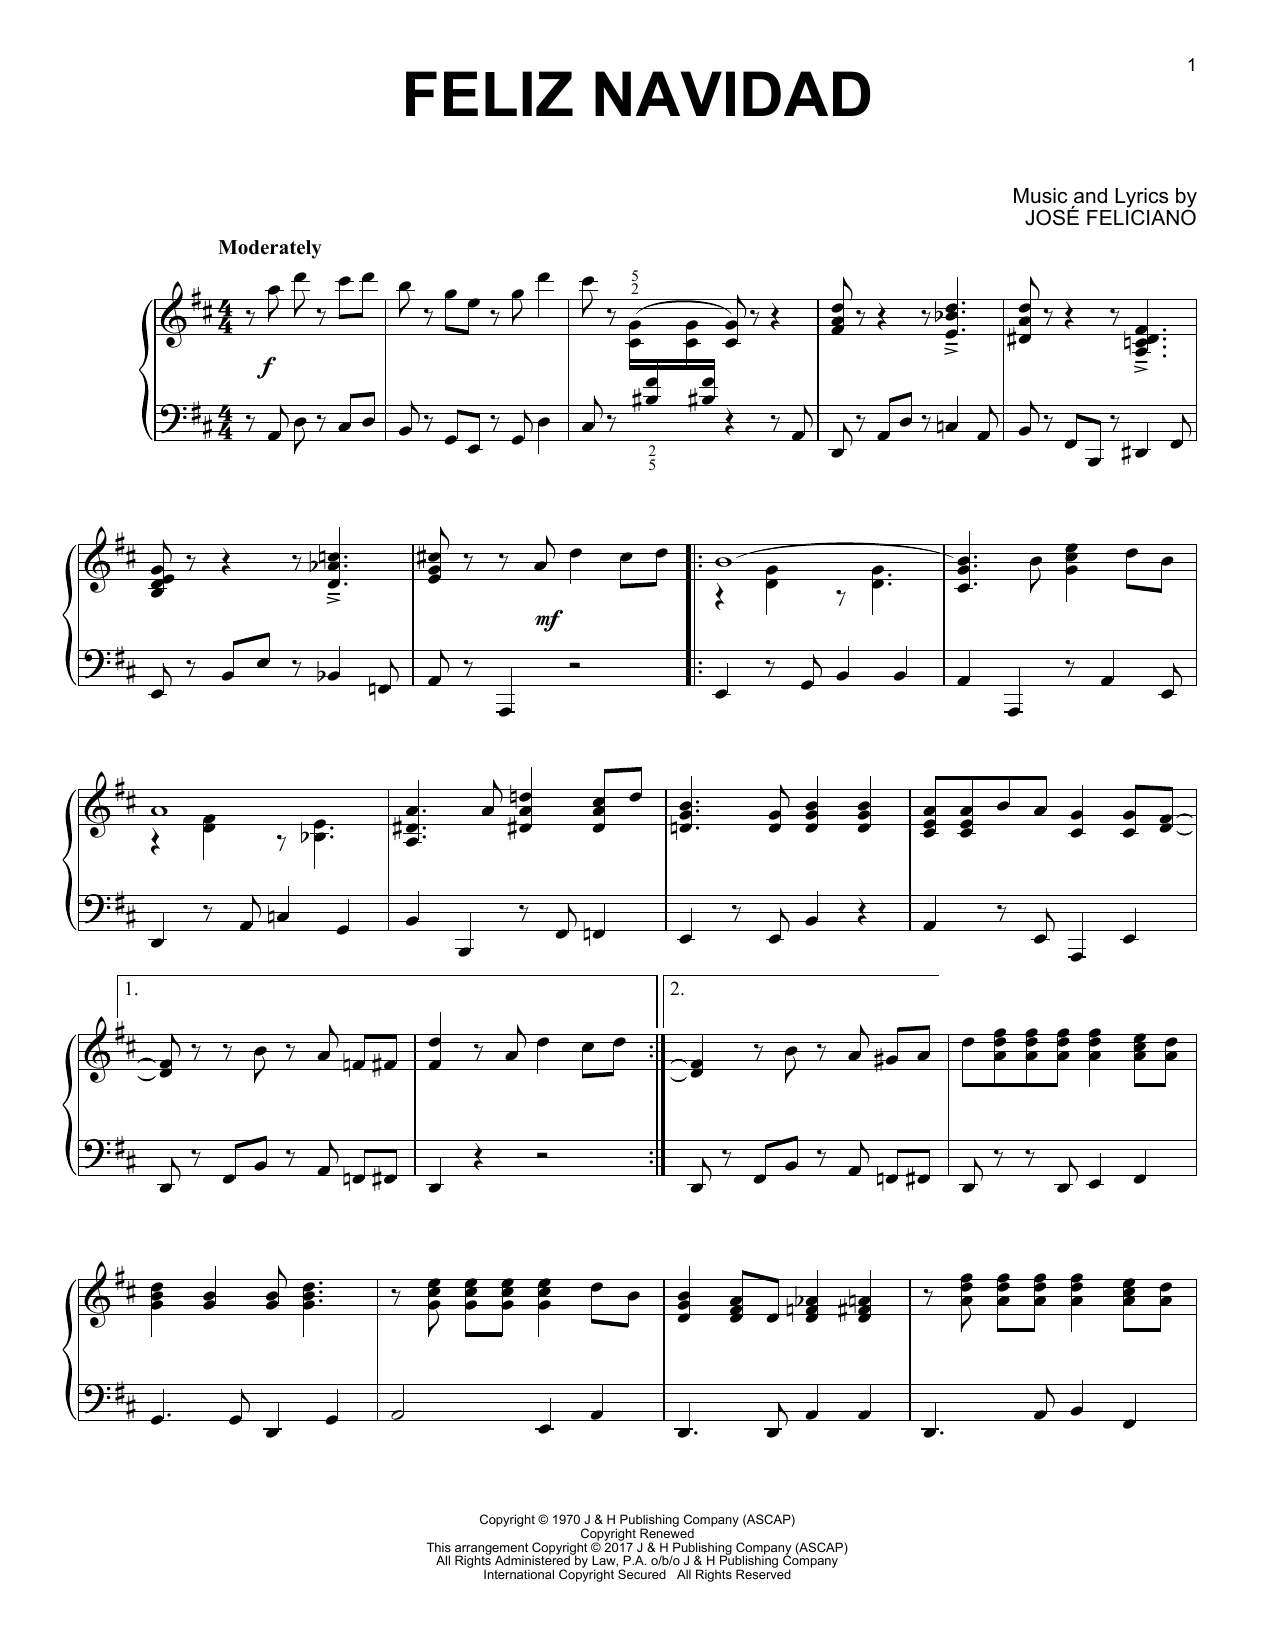 Jose Feliciano Feliz Navidad Sheet Music Notes Chords Piano Download World 196455 Pdf